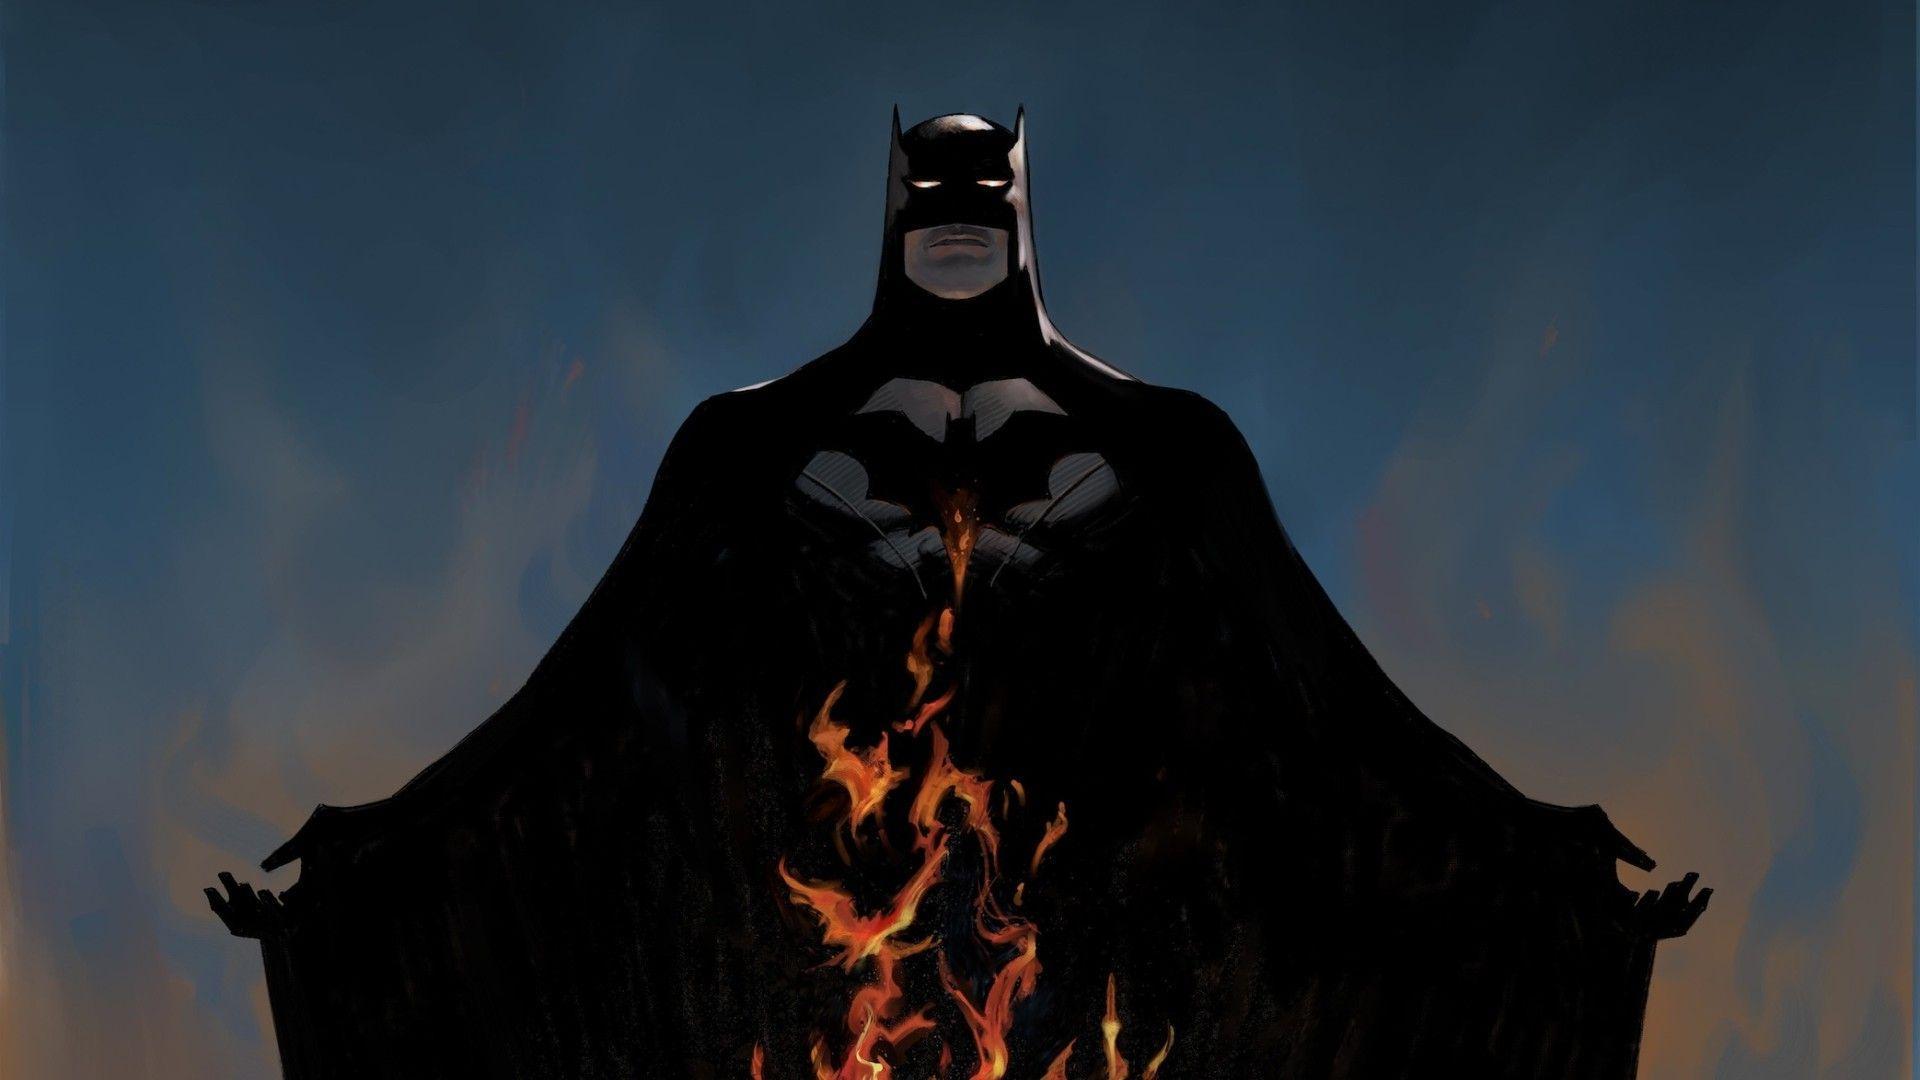 Wallpaper of Batman or Dark Knight a DC comic figur in HD